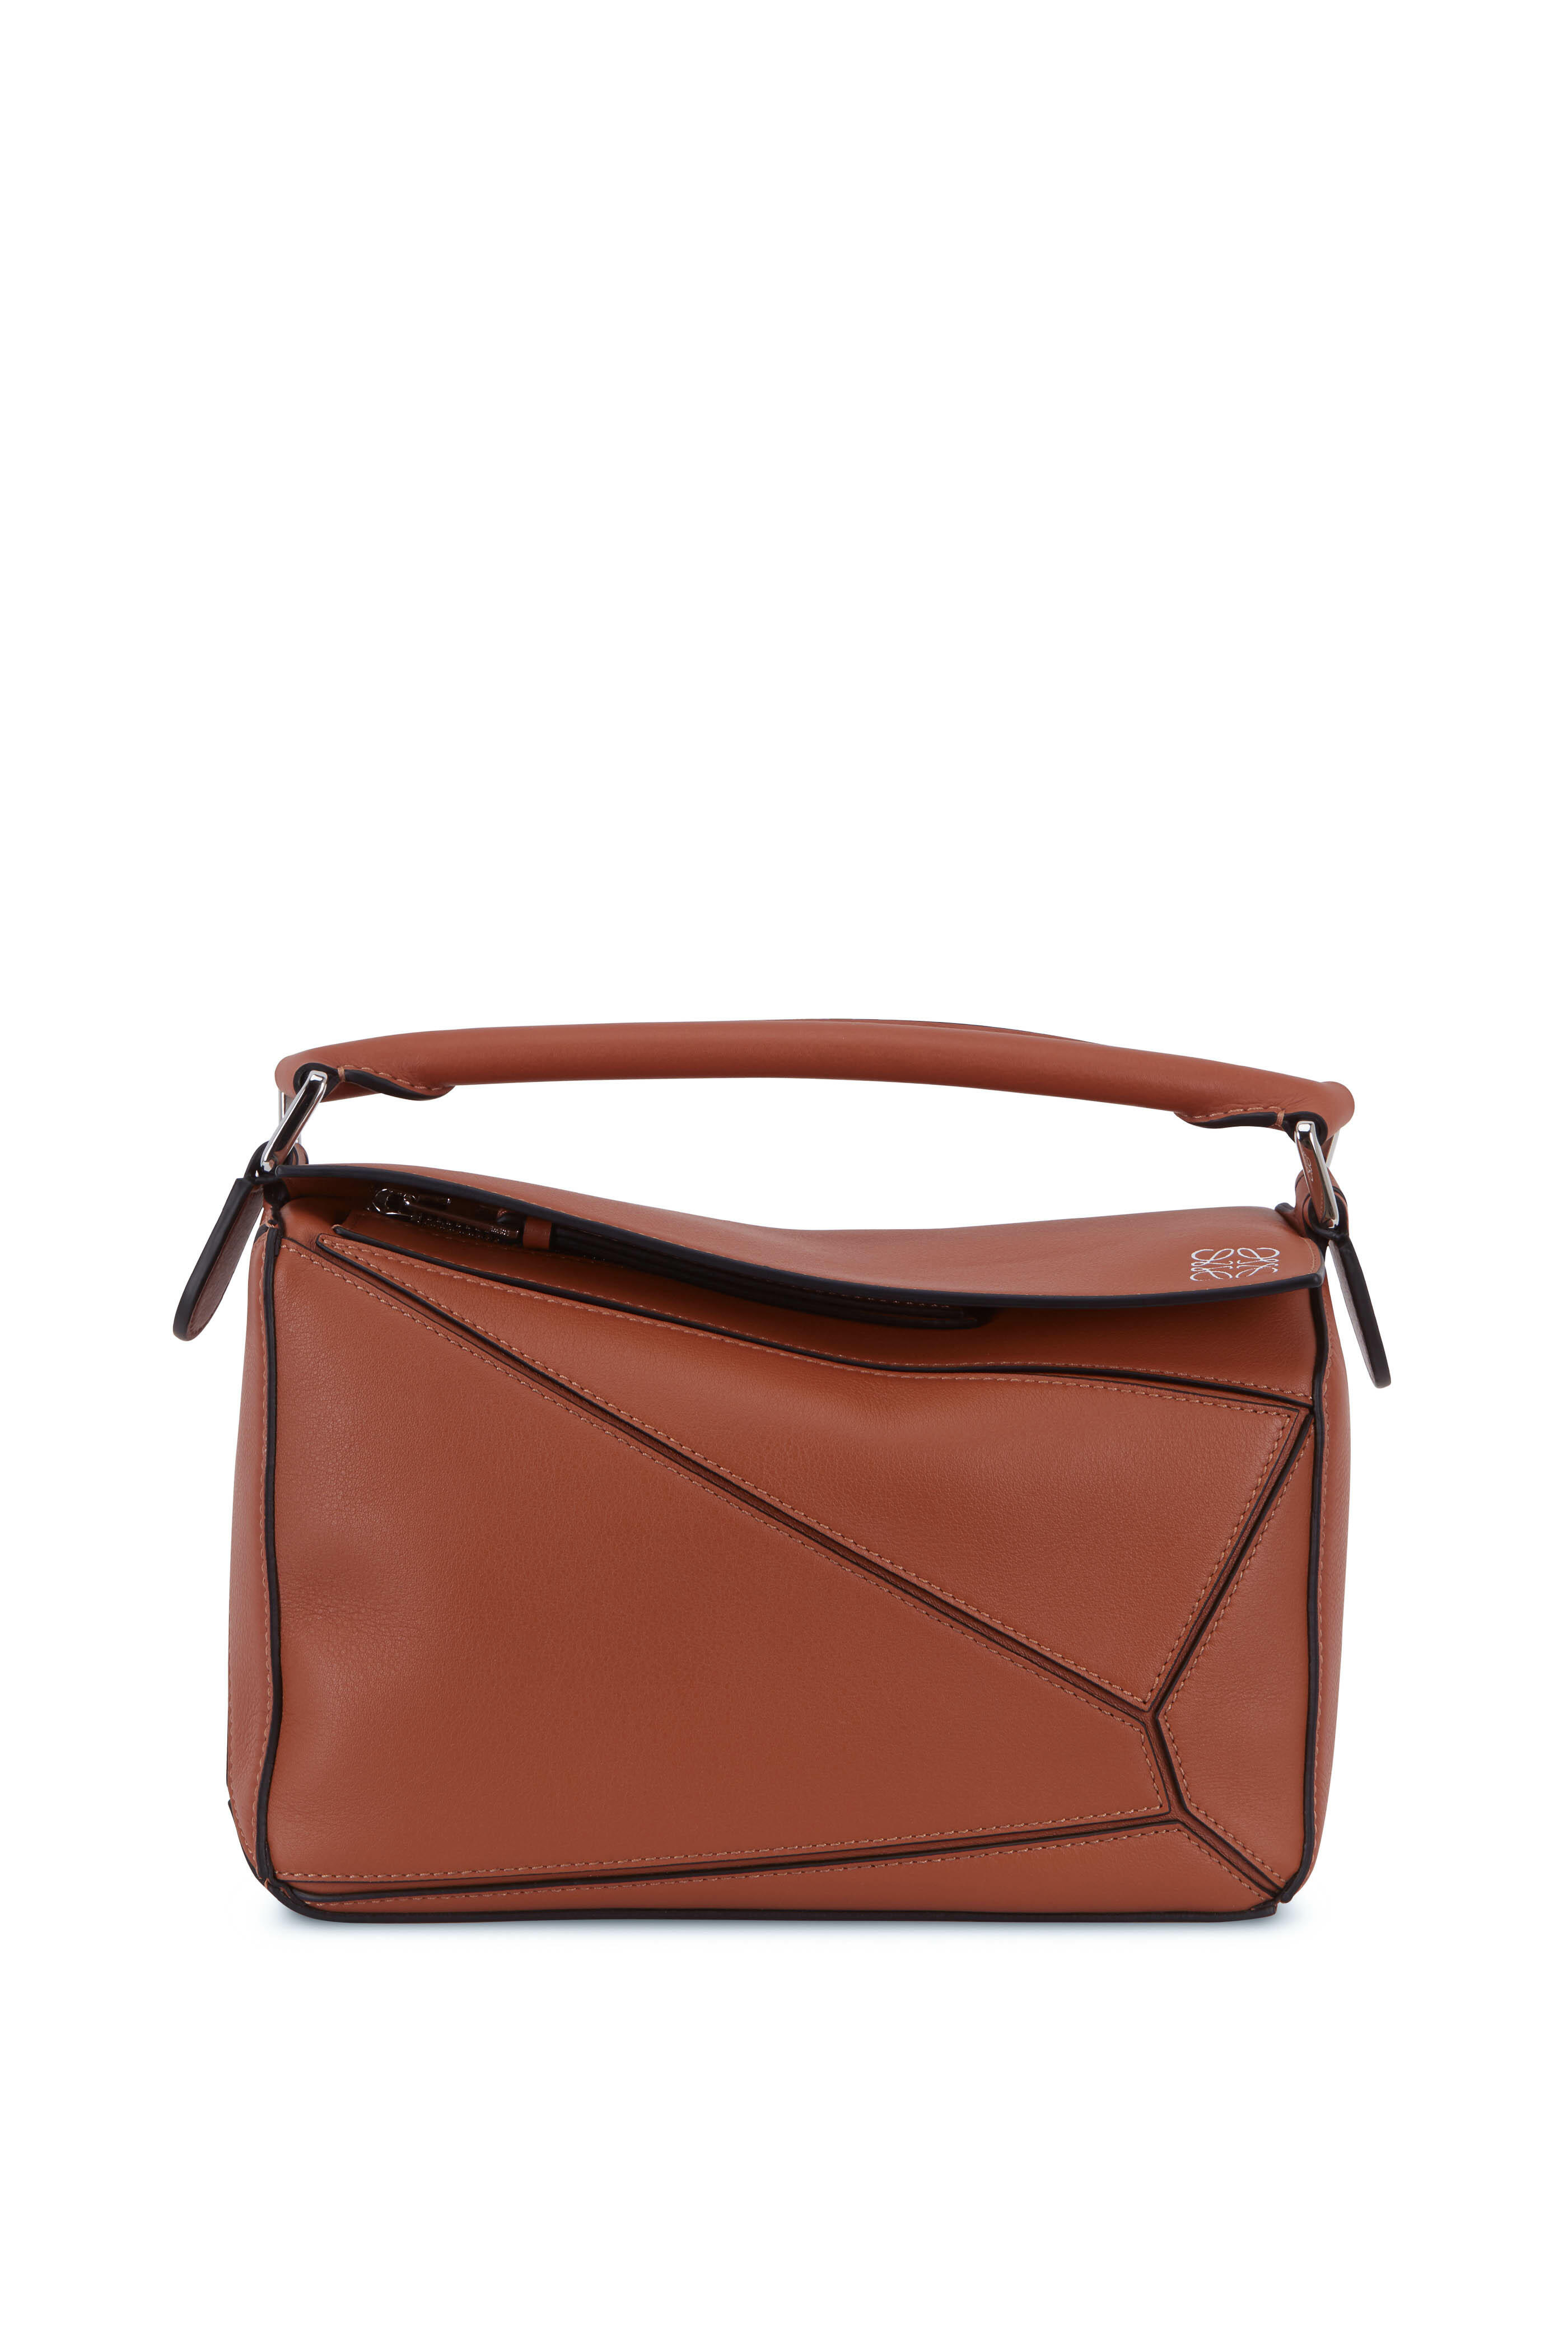 Loewe Puzzle Bag Tan Leather SMALL 2WAY Handbag New